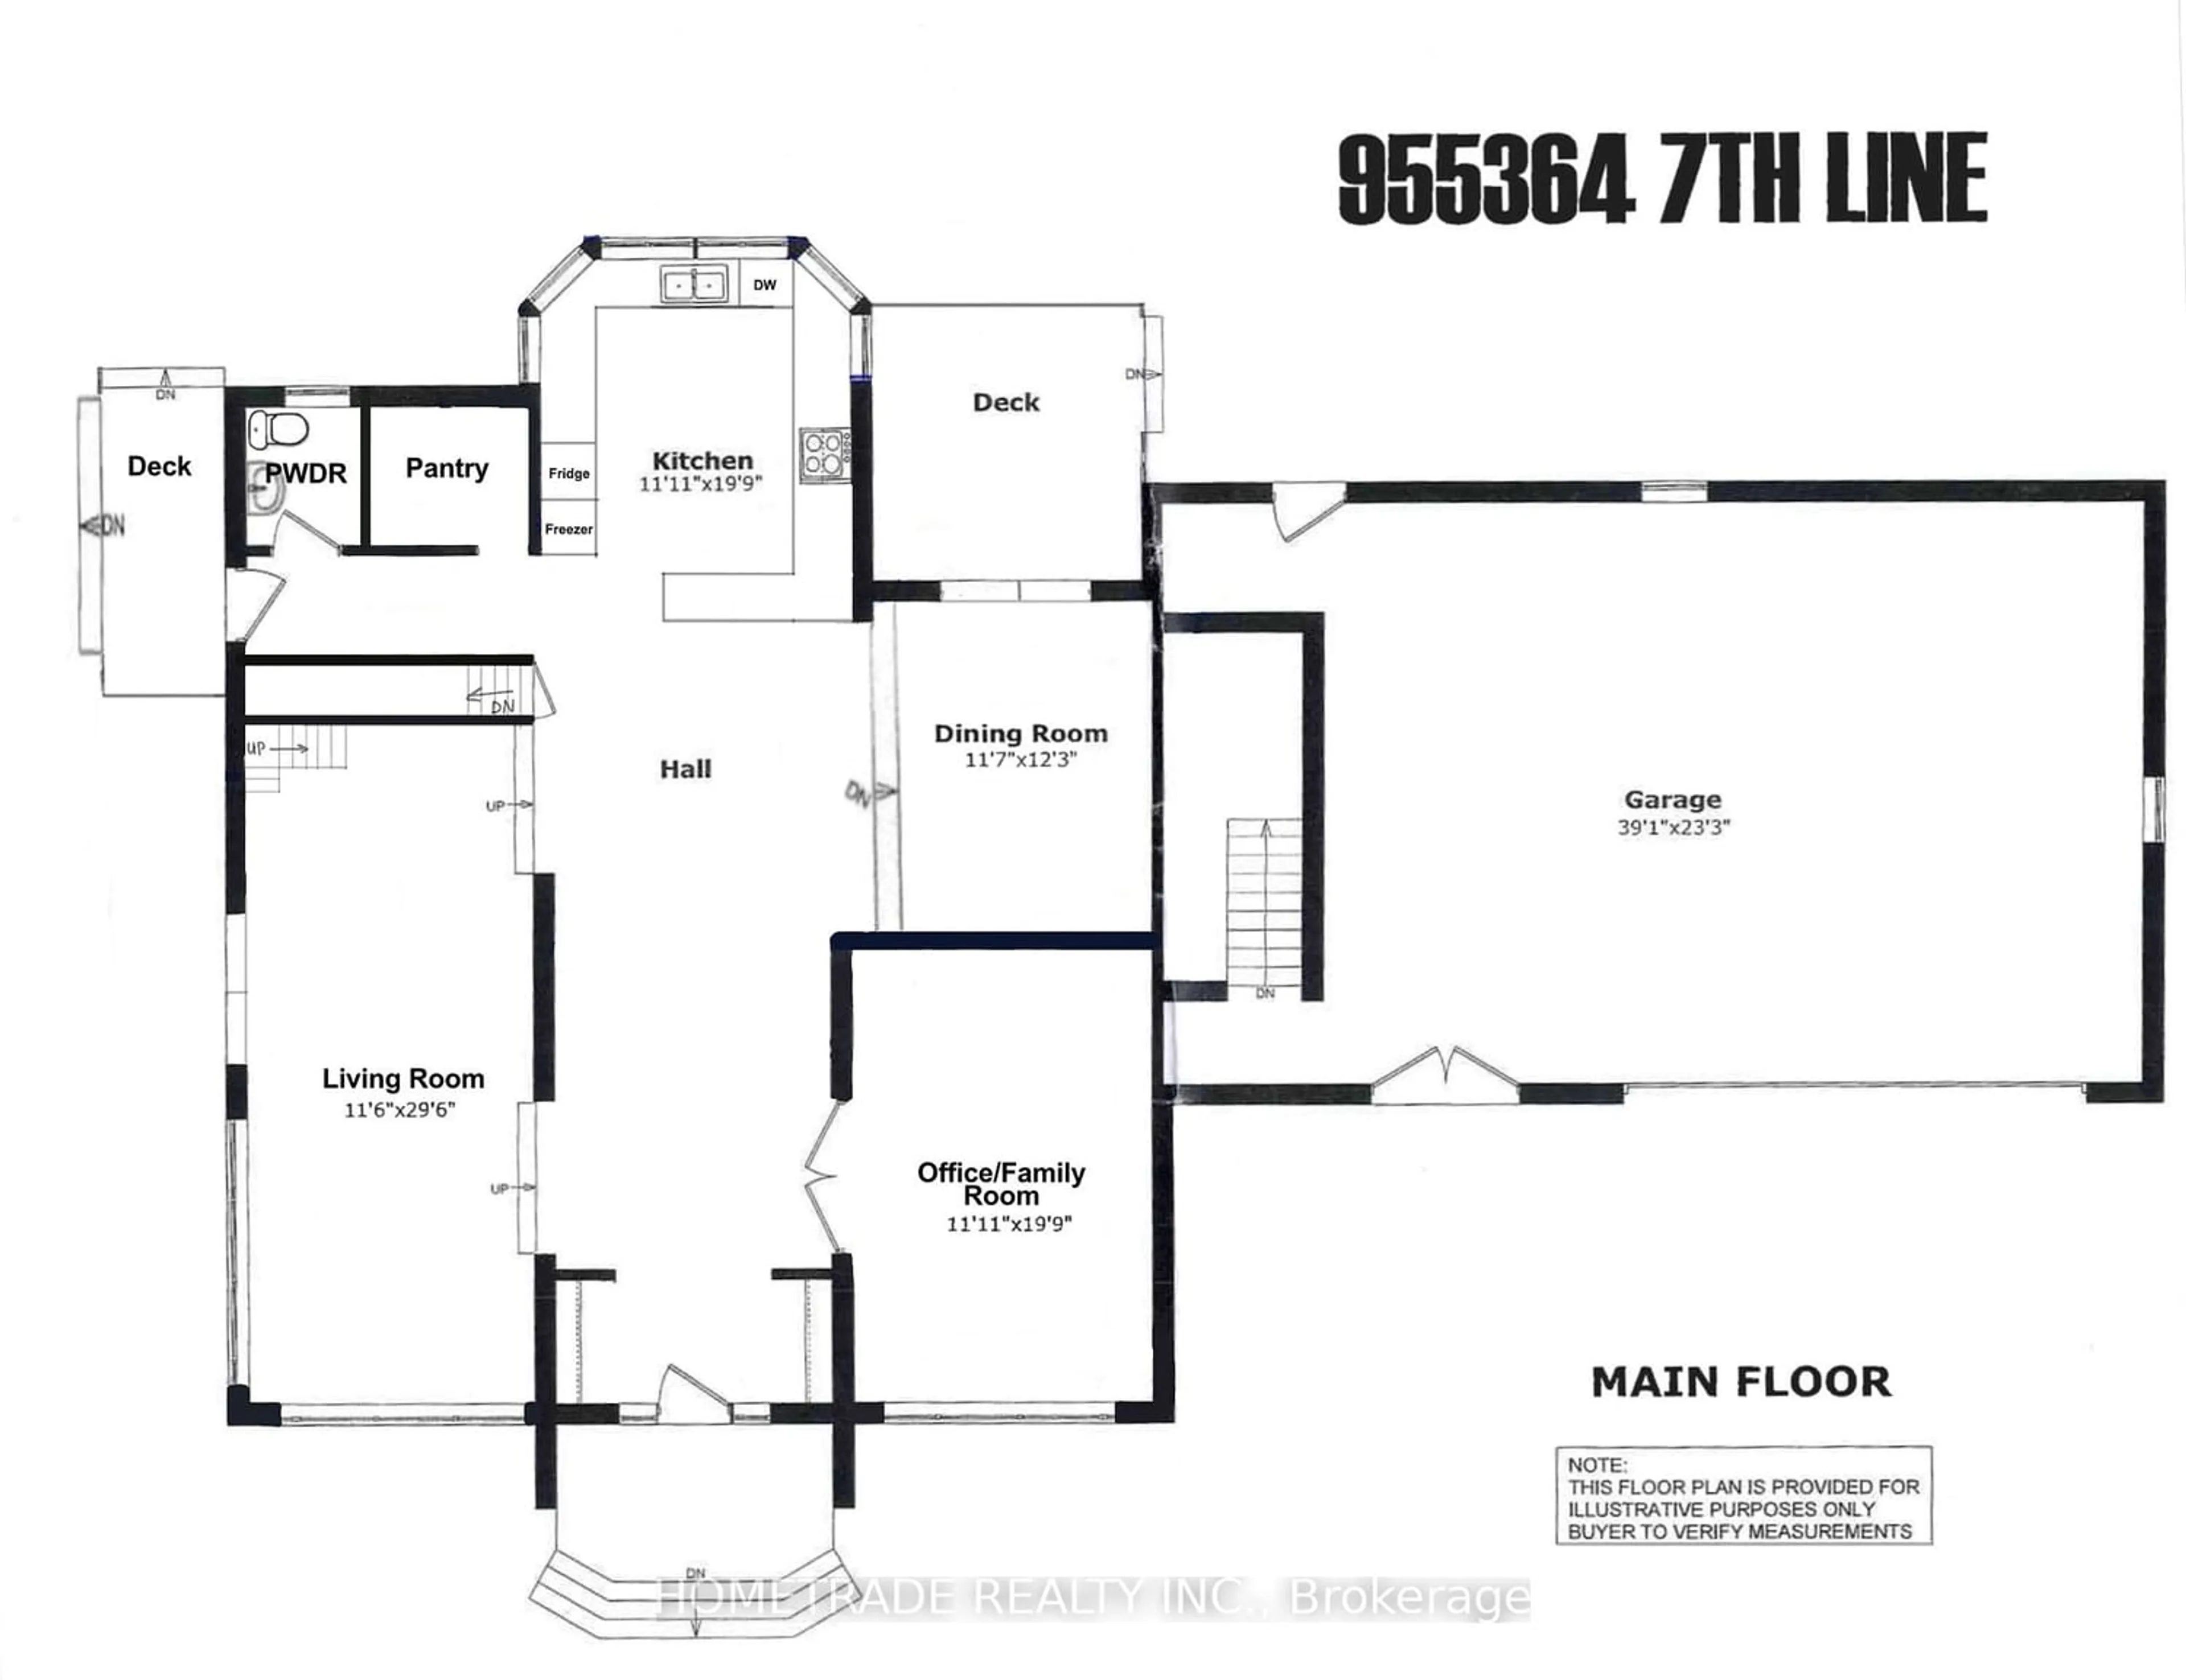 Floor plan for 955364 7th Line Ehs Line, Mono Ontario L9V 1C7